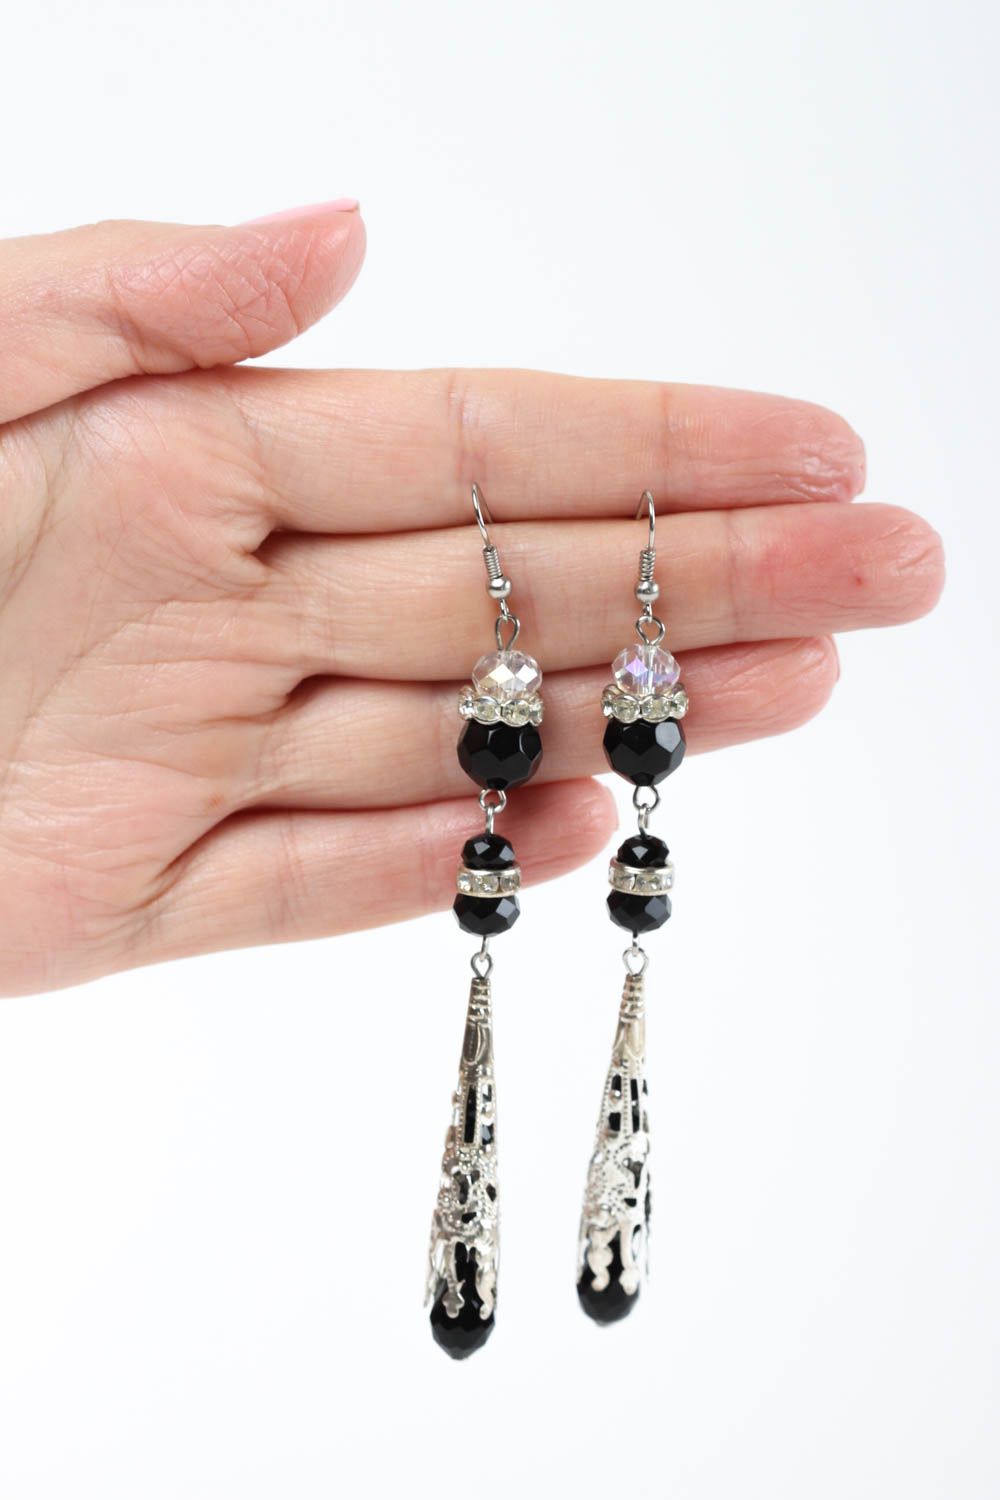 Handmade jewelry designer accessory unusual earrings for girls gift ideas photo 5